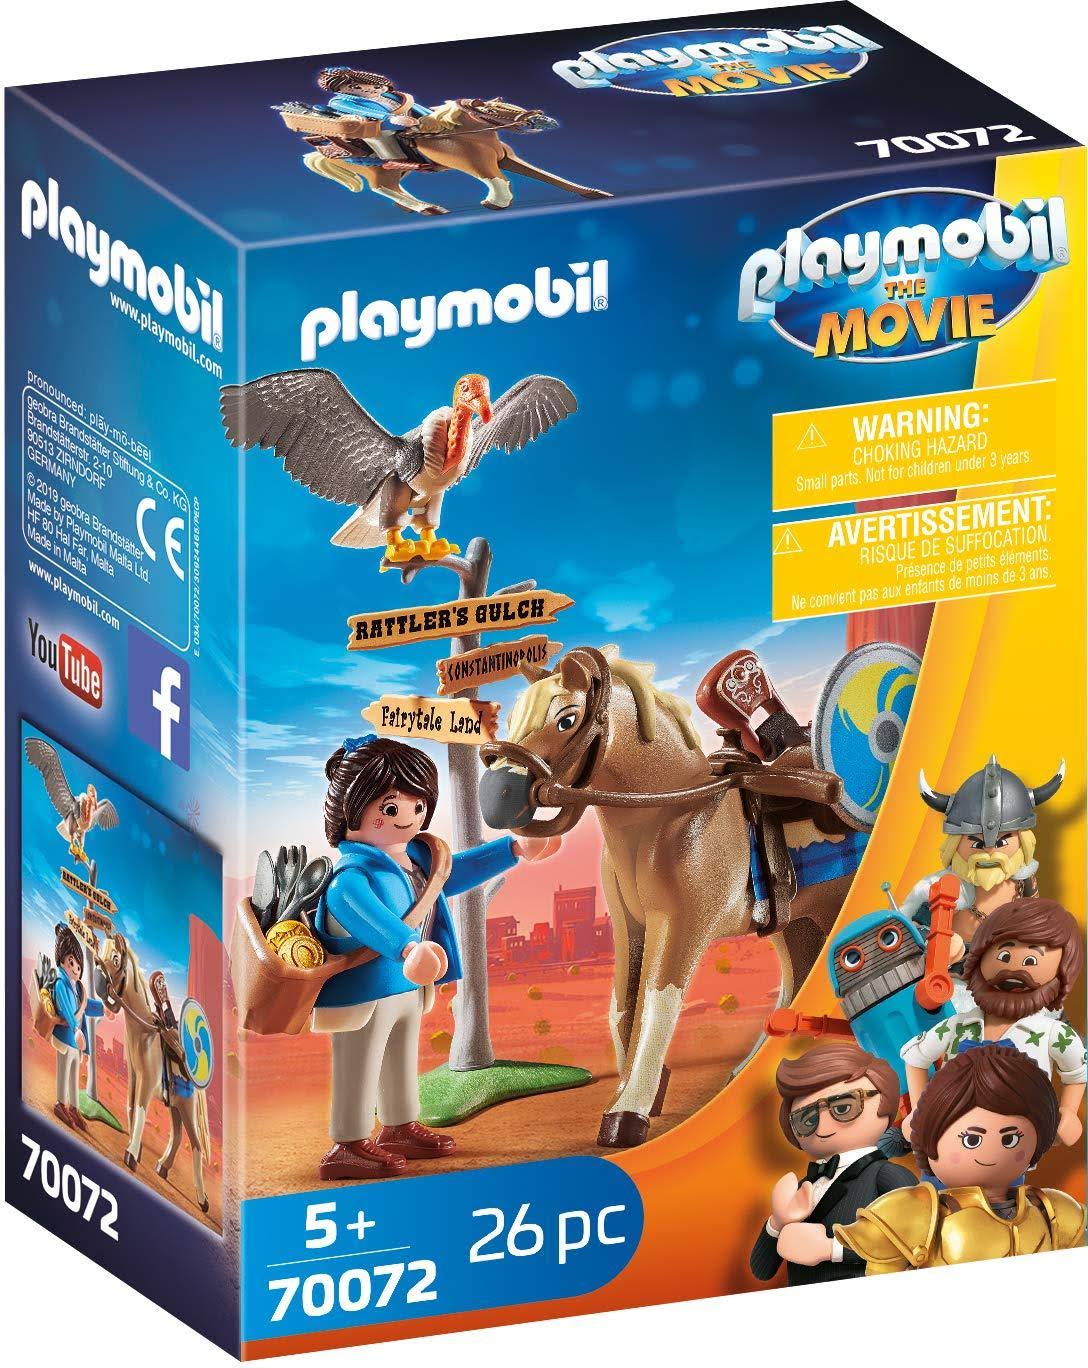 Playmobil 70072 Marla and Horse Playset - 26pcs